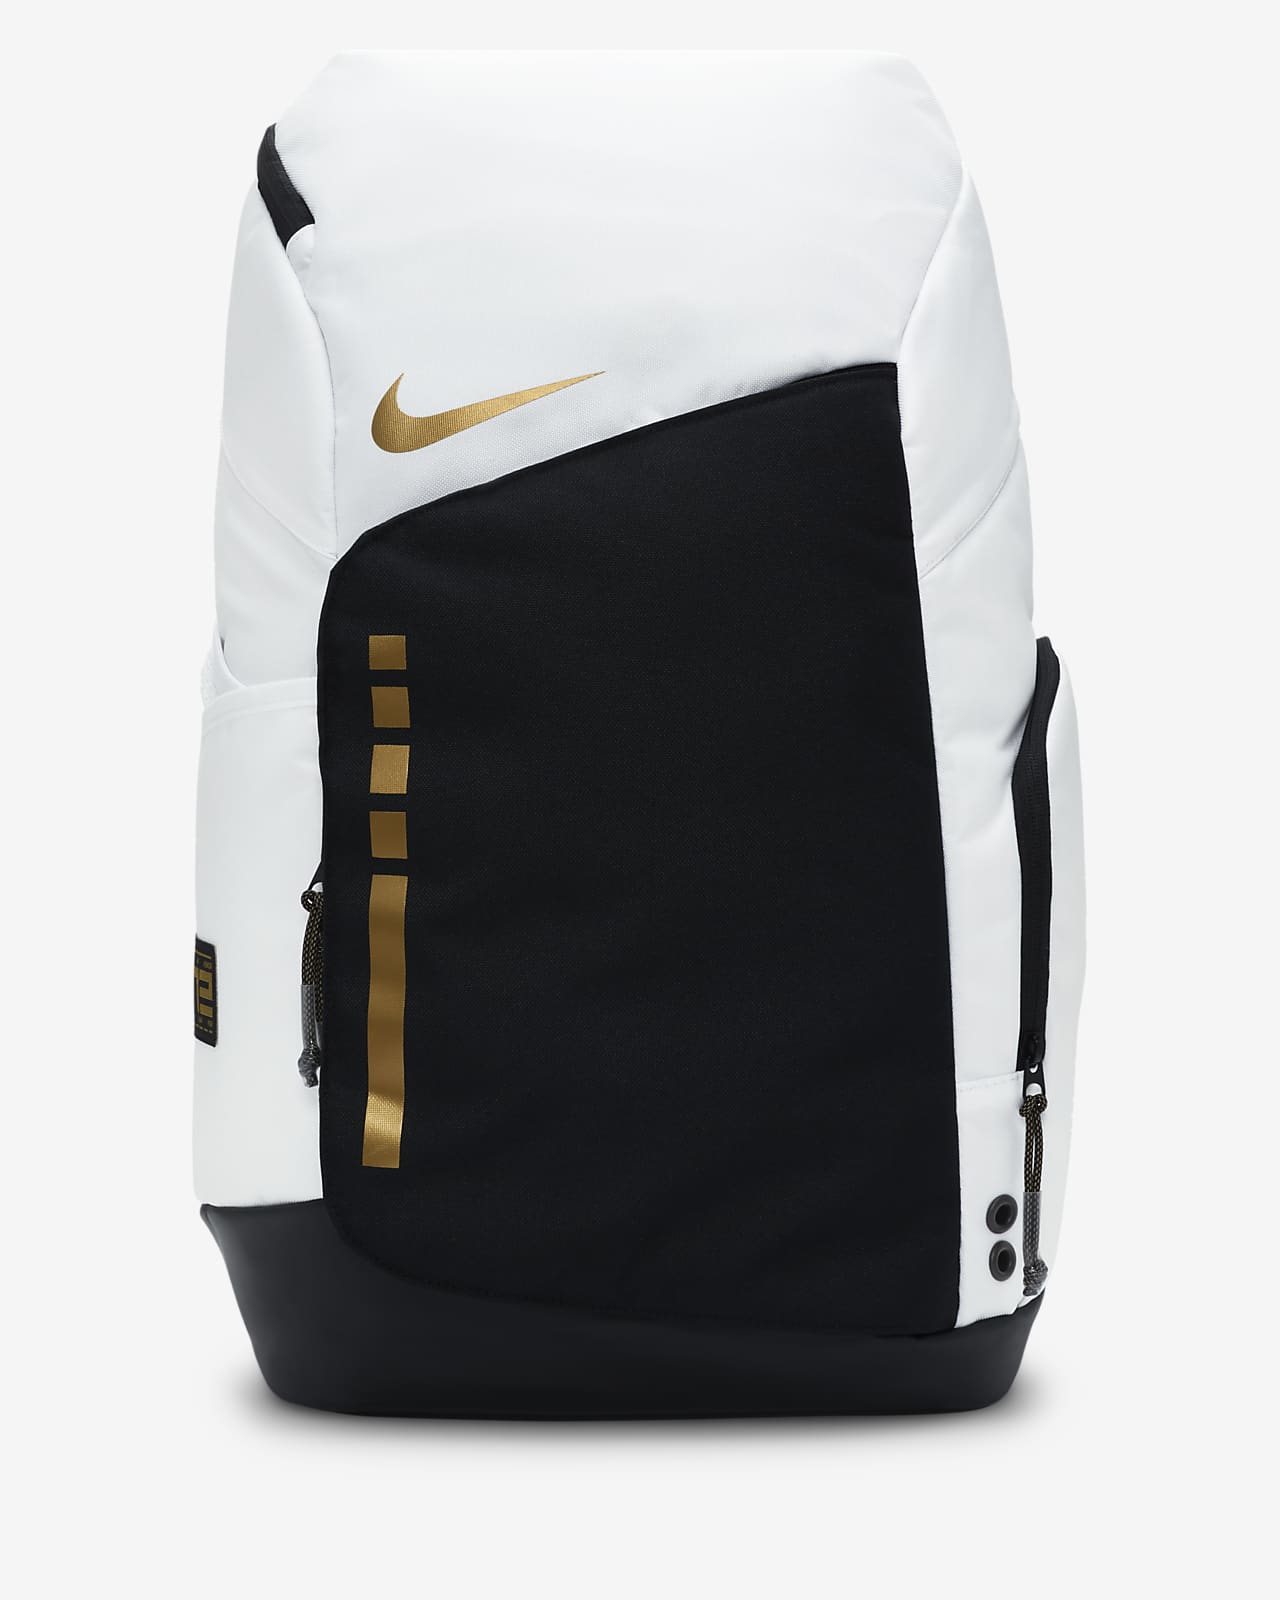 W2c nike elite basketball bag? : r/Sugargoo